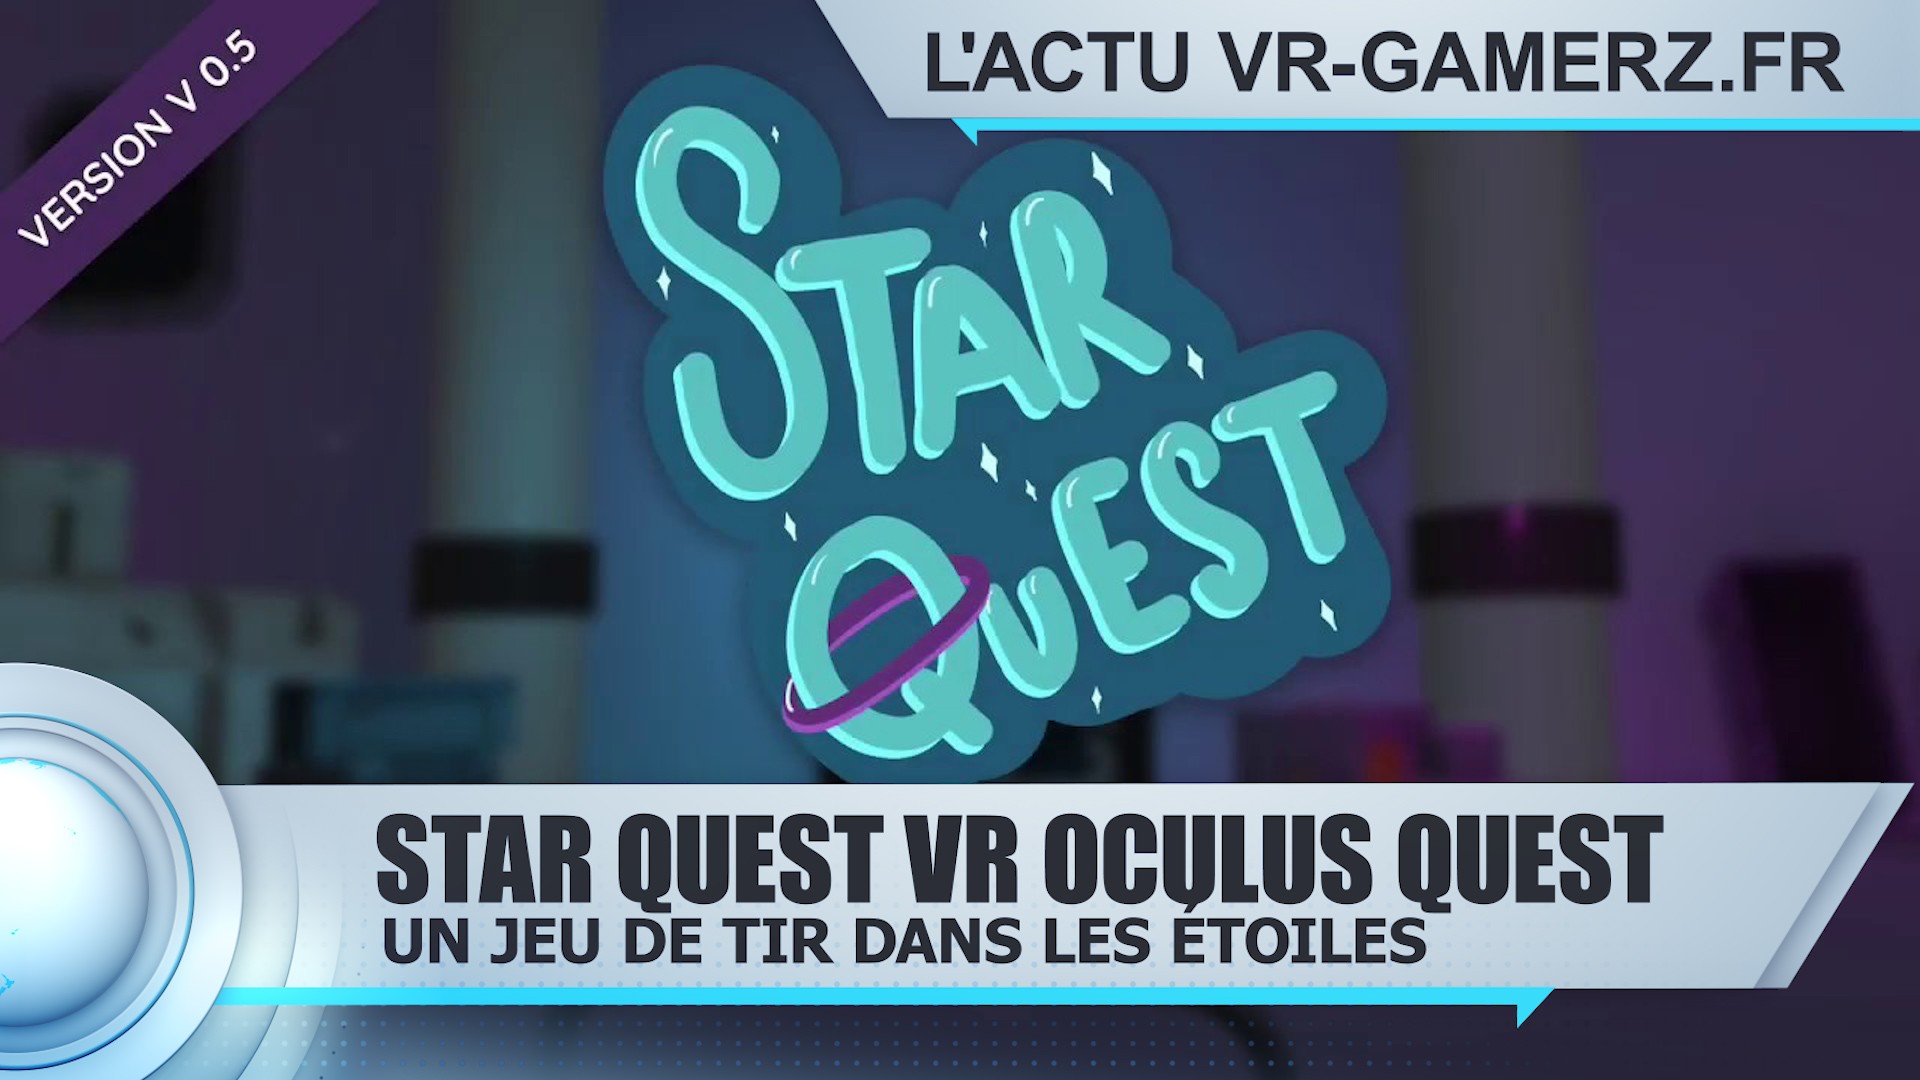 Star Quest VR Oculus quest